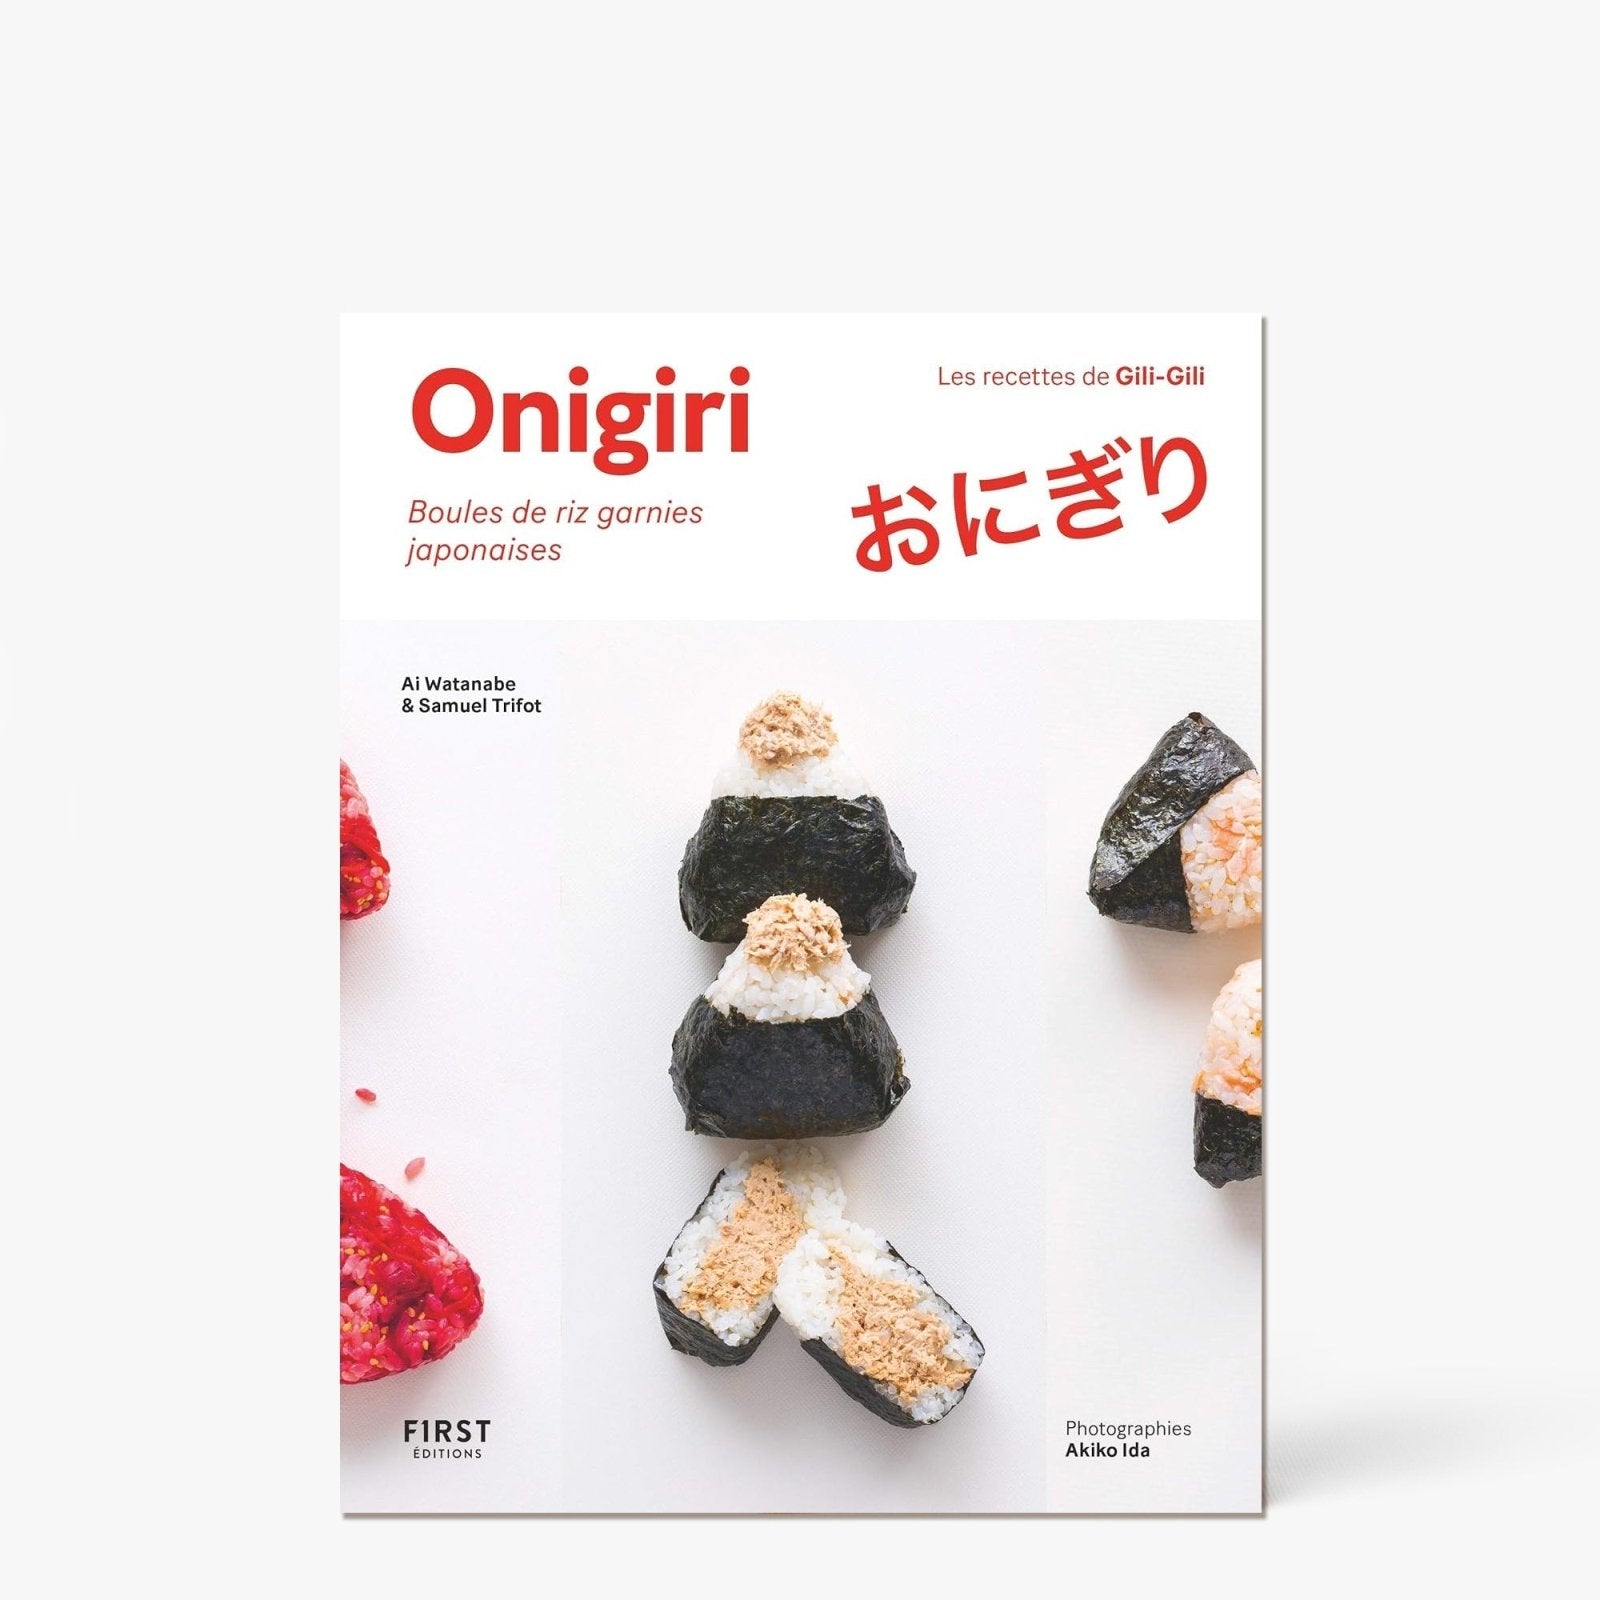 Onigiris. Boules de riz japonaises garnies - First - iRASSHAi